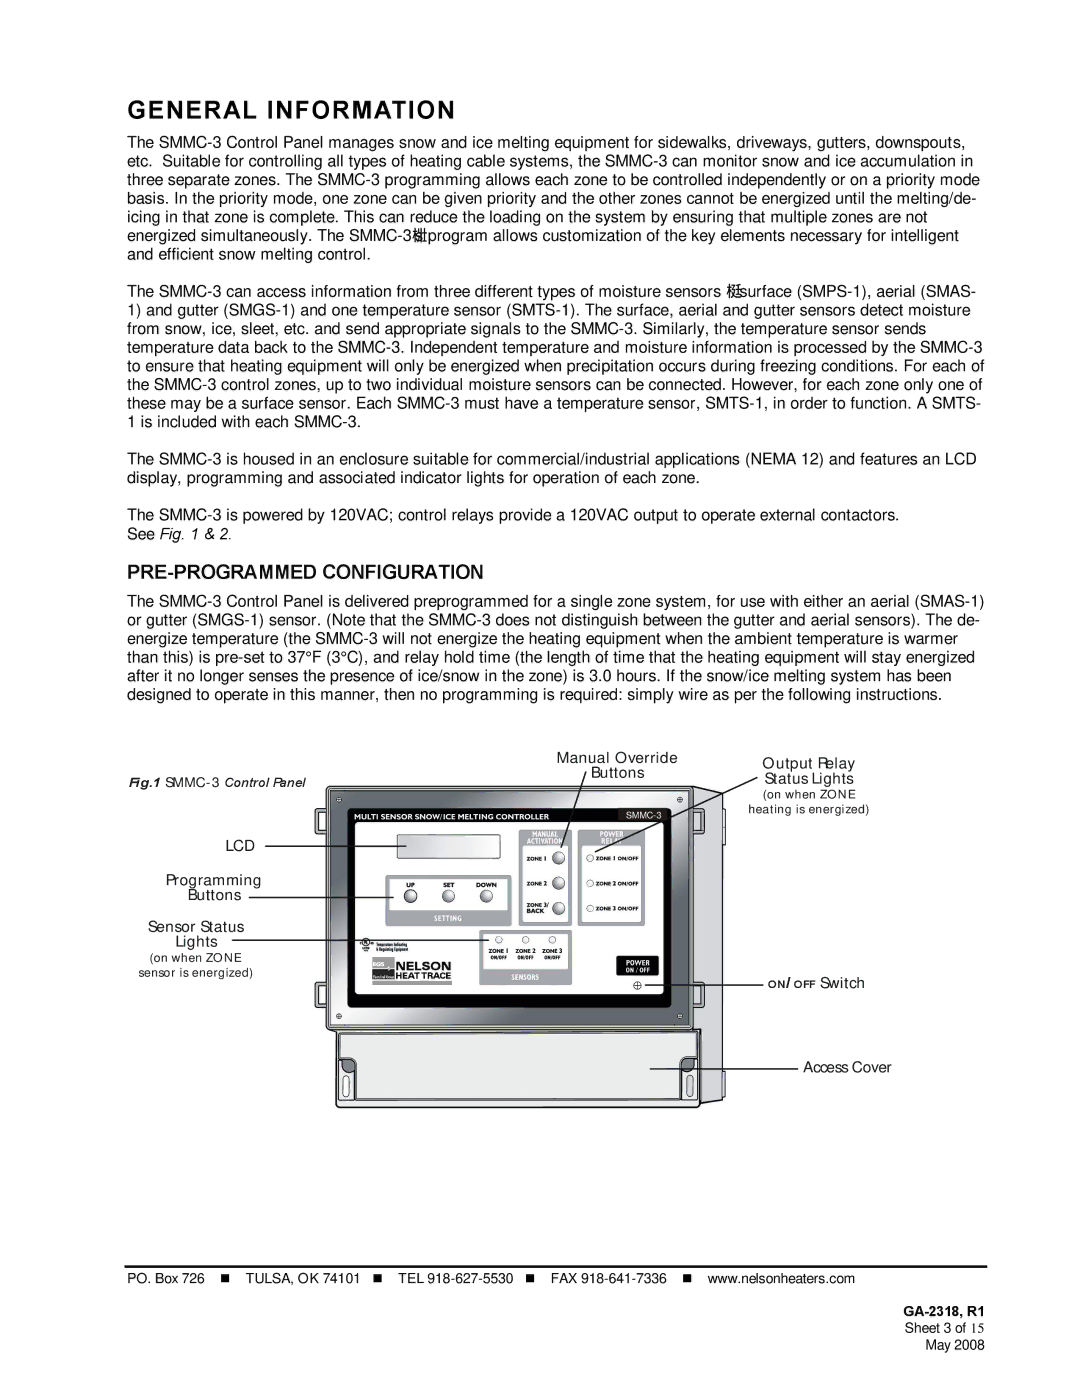 Emerson SMMC-3 manual General Information, PRE-PROGRAMMED Configuration, GA-2318, R1 